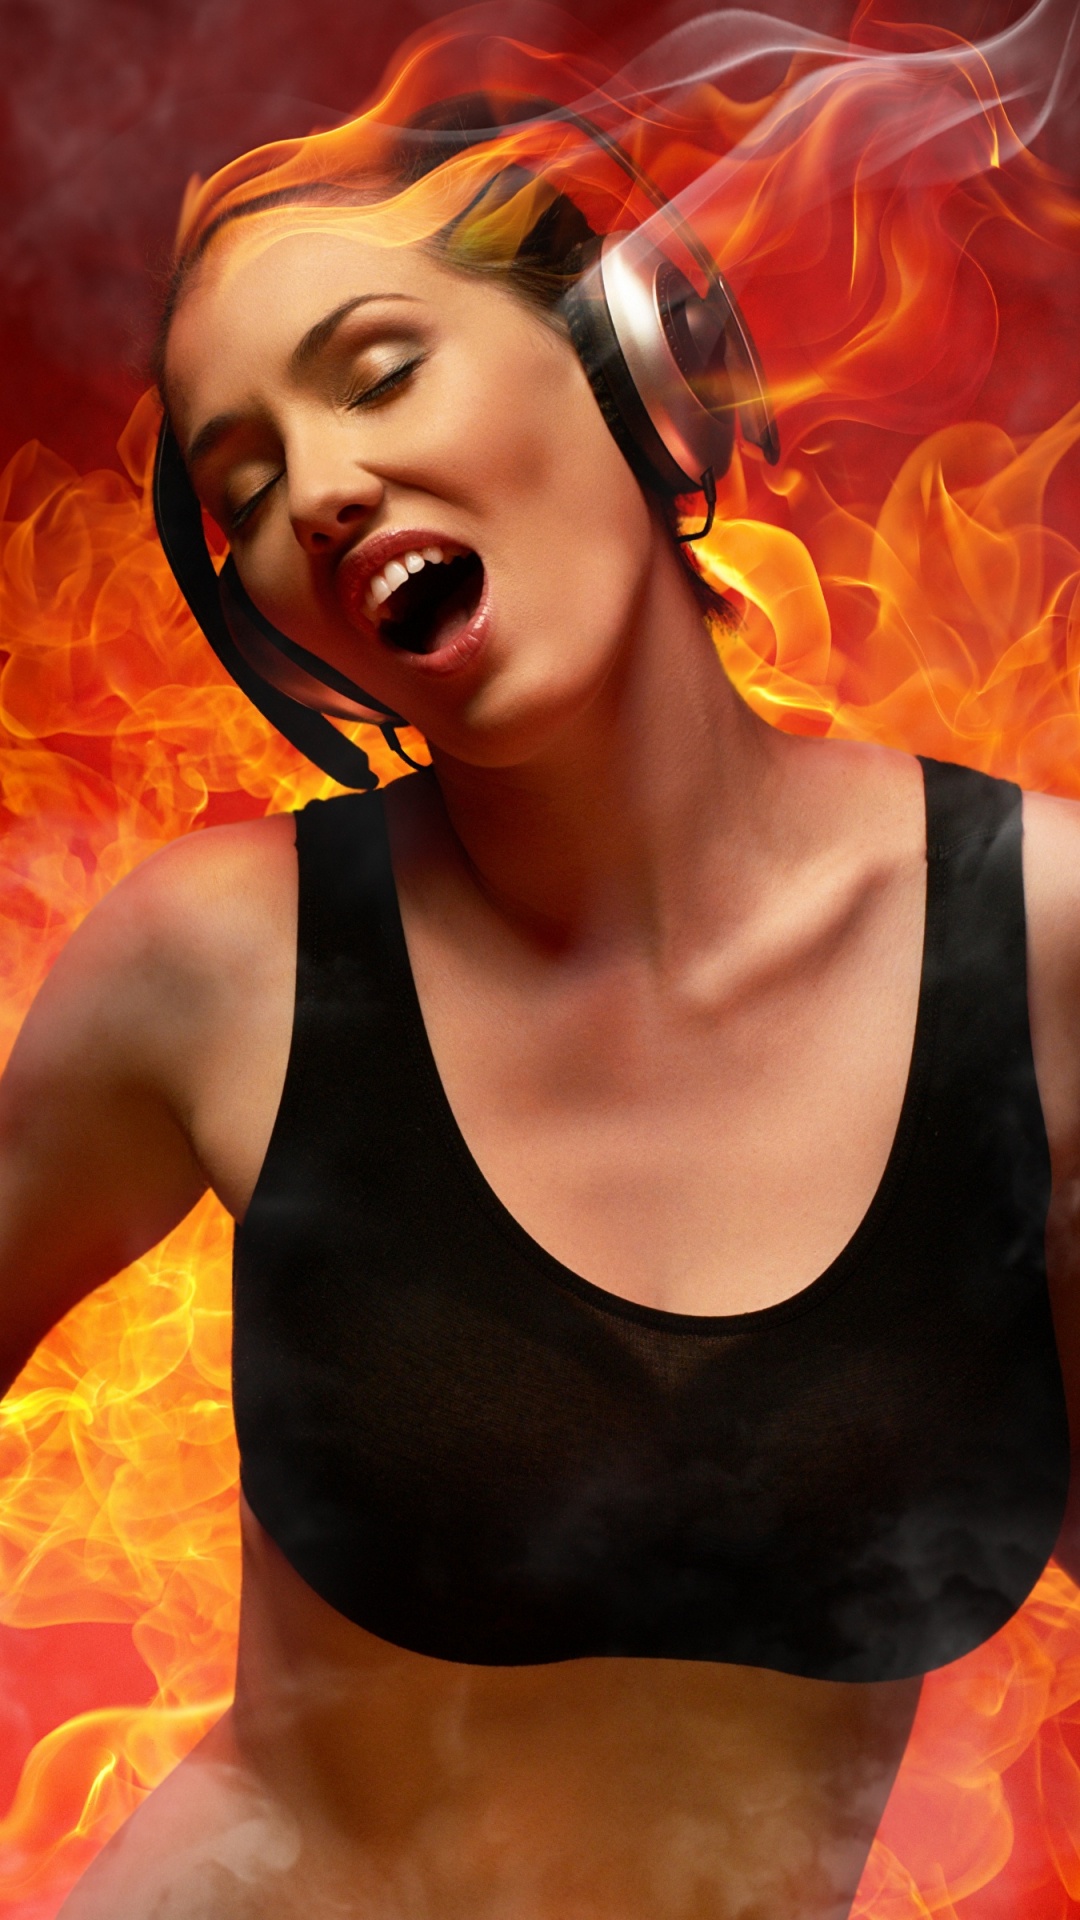 Flame, Muscle, Fire, Flesh, DJ Mixer. Wallpaper in 1080x1920 Resolution